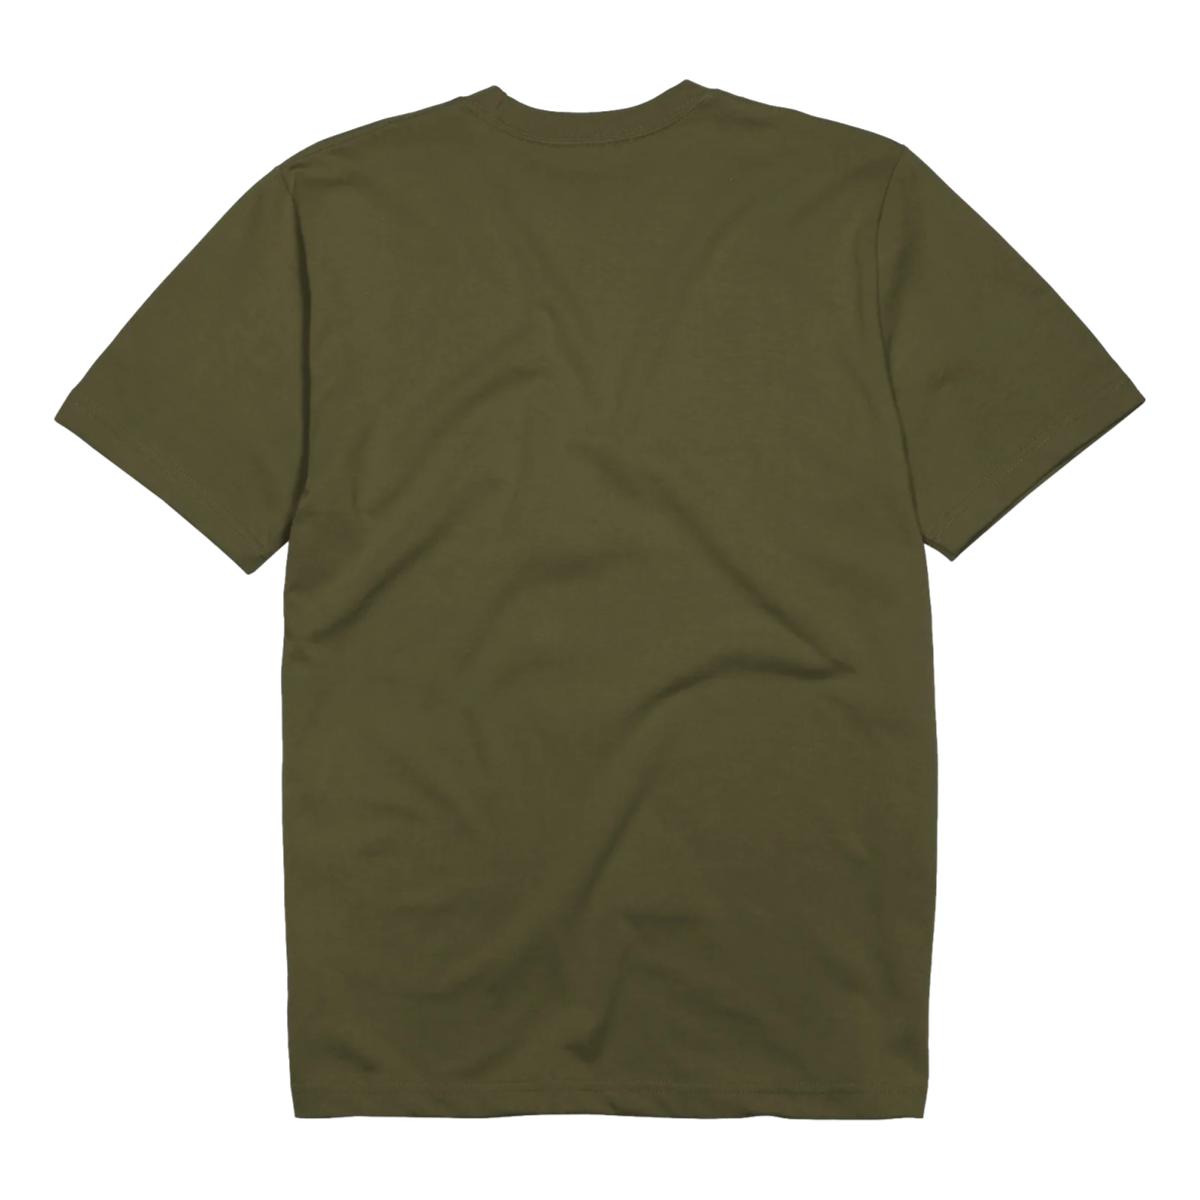 8oz Heavyweight Fieldhouse Tee Olive Drab - T Shirts